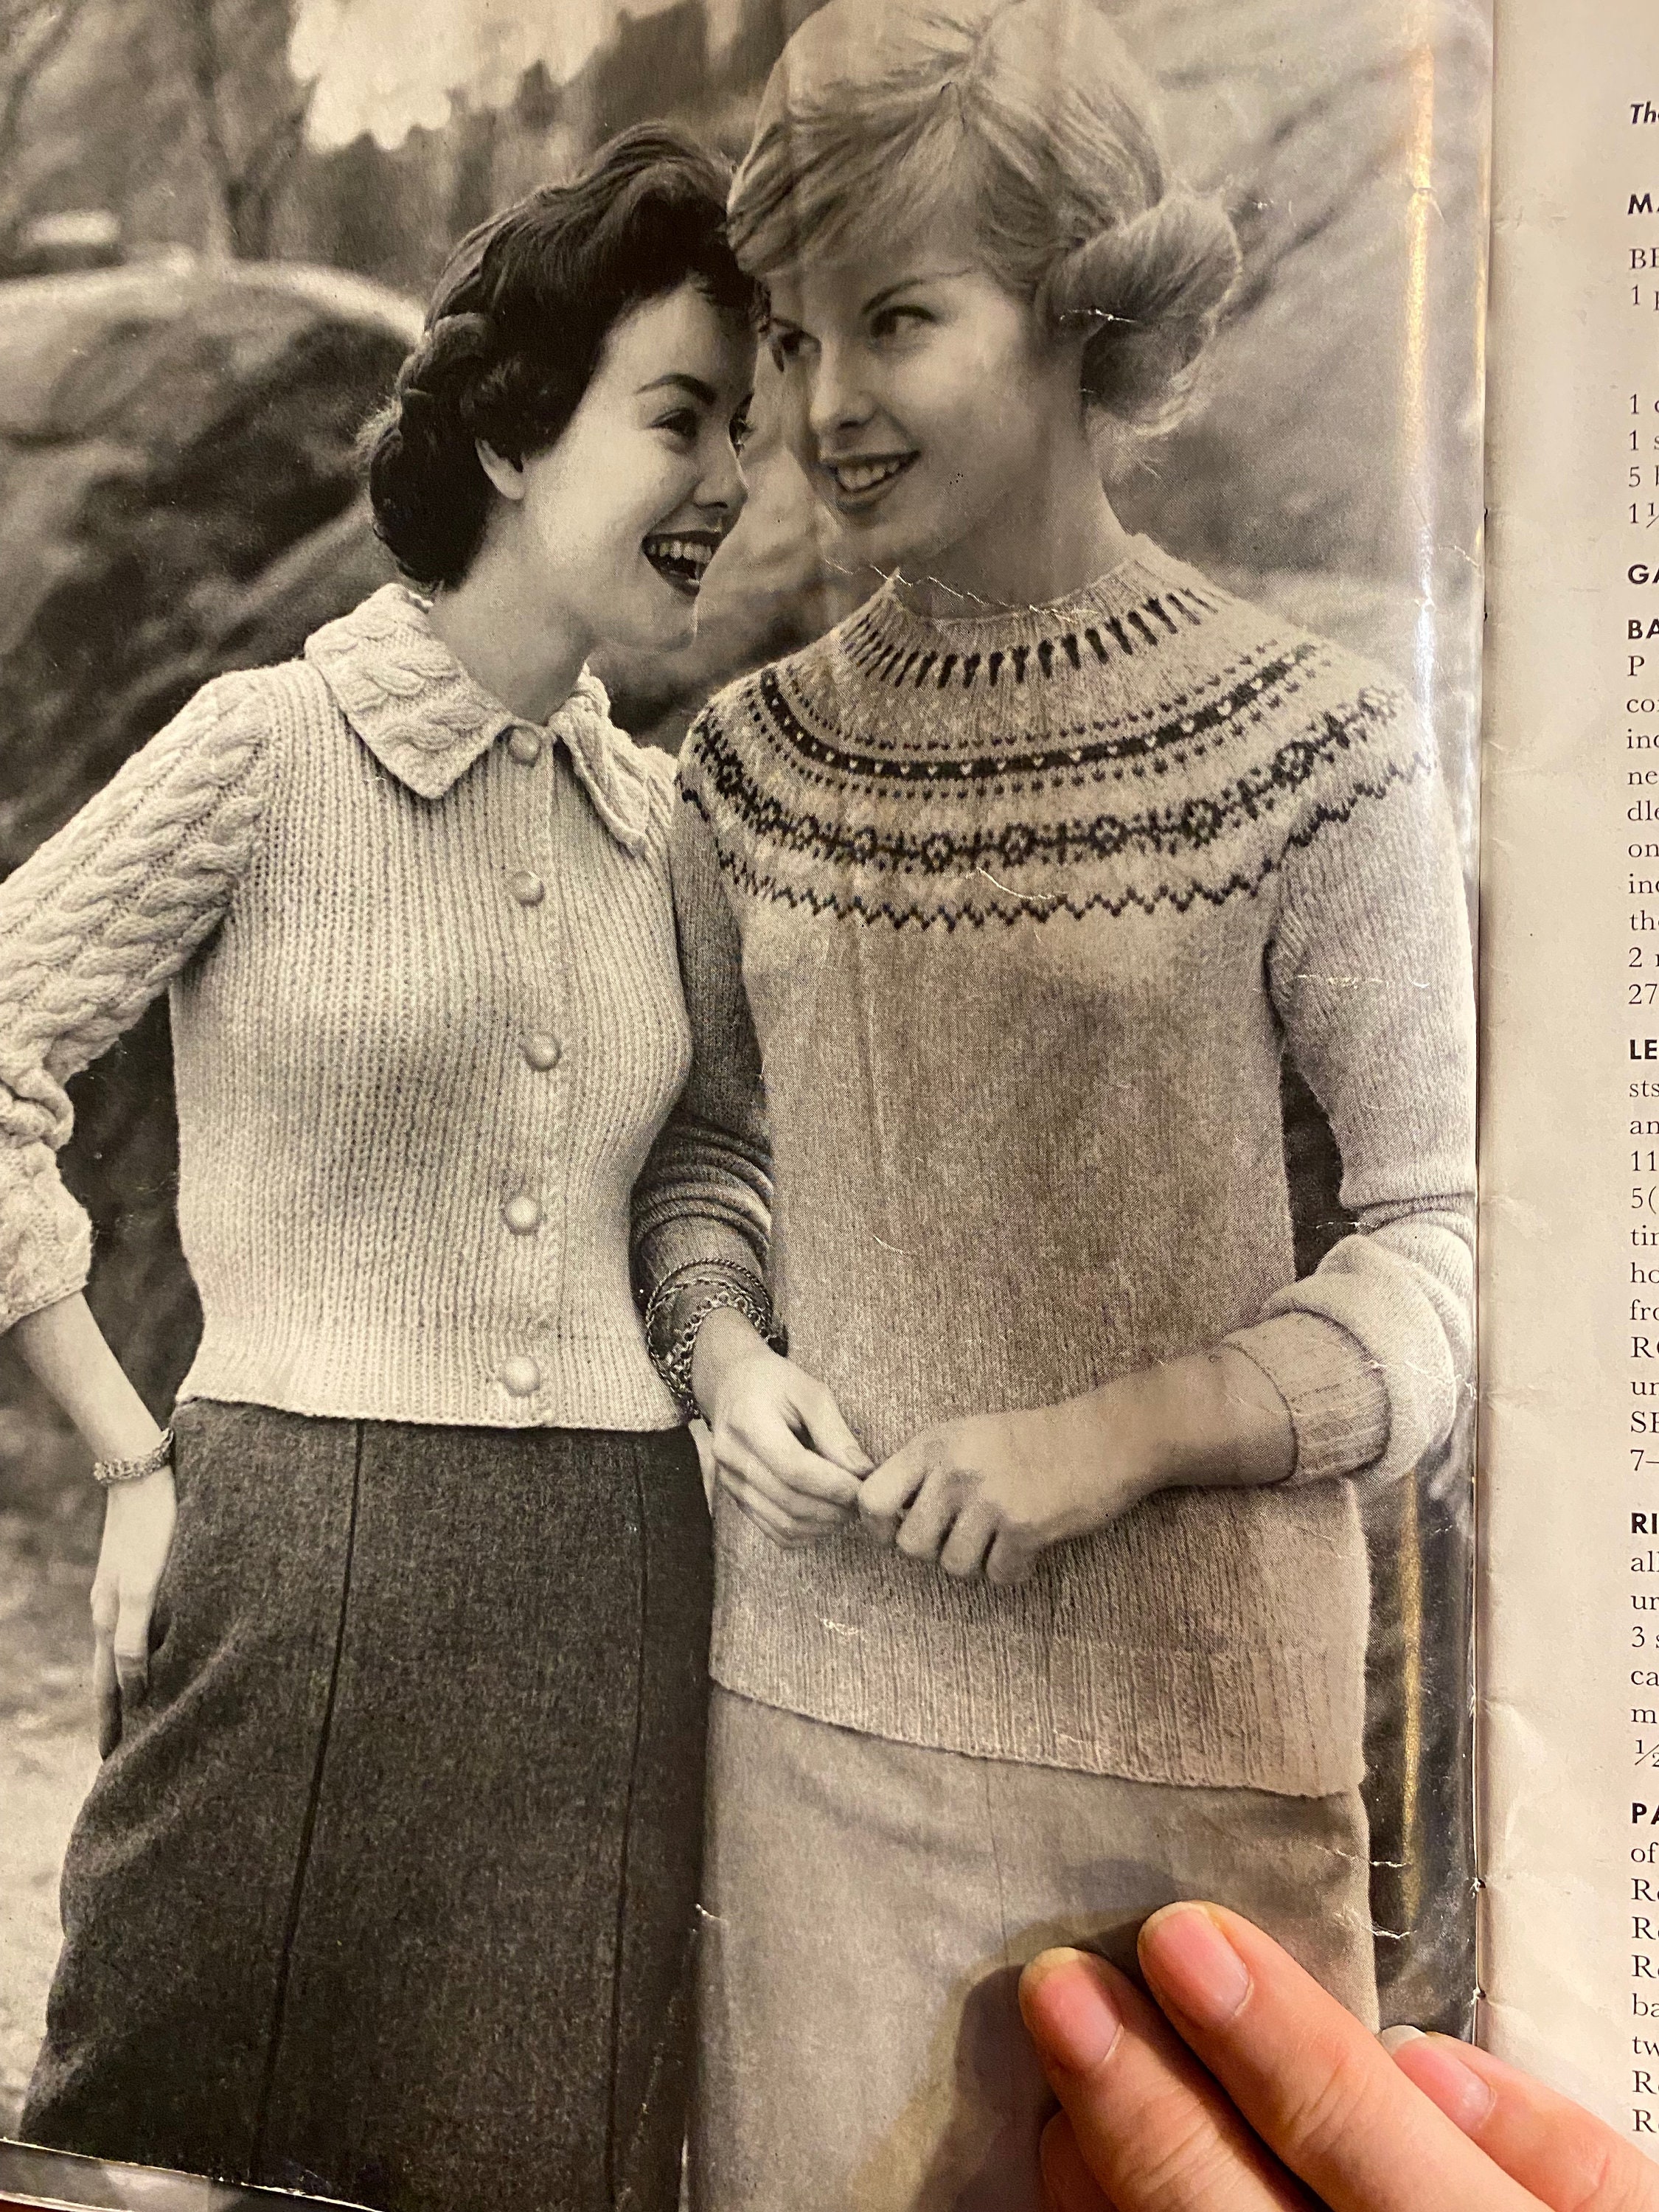 4 Vintage 1960's/70's Crochet, Knitting Pattern Books, Bernat & Brunswick 